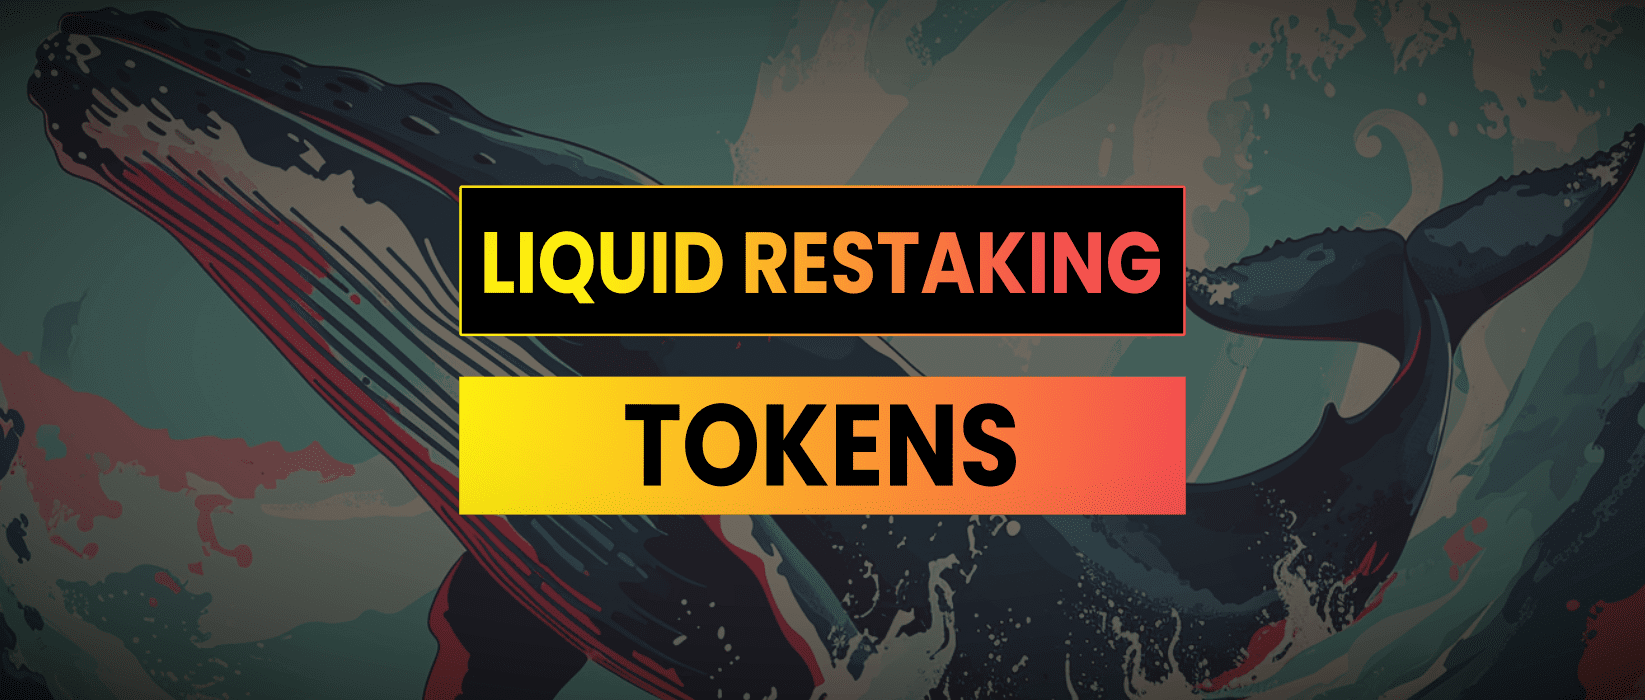 LRTs | Liquid Restaking Tokens